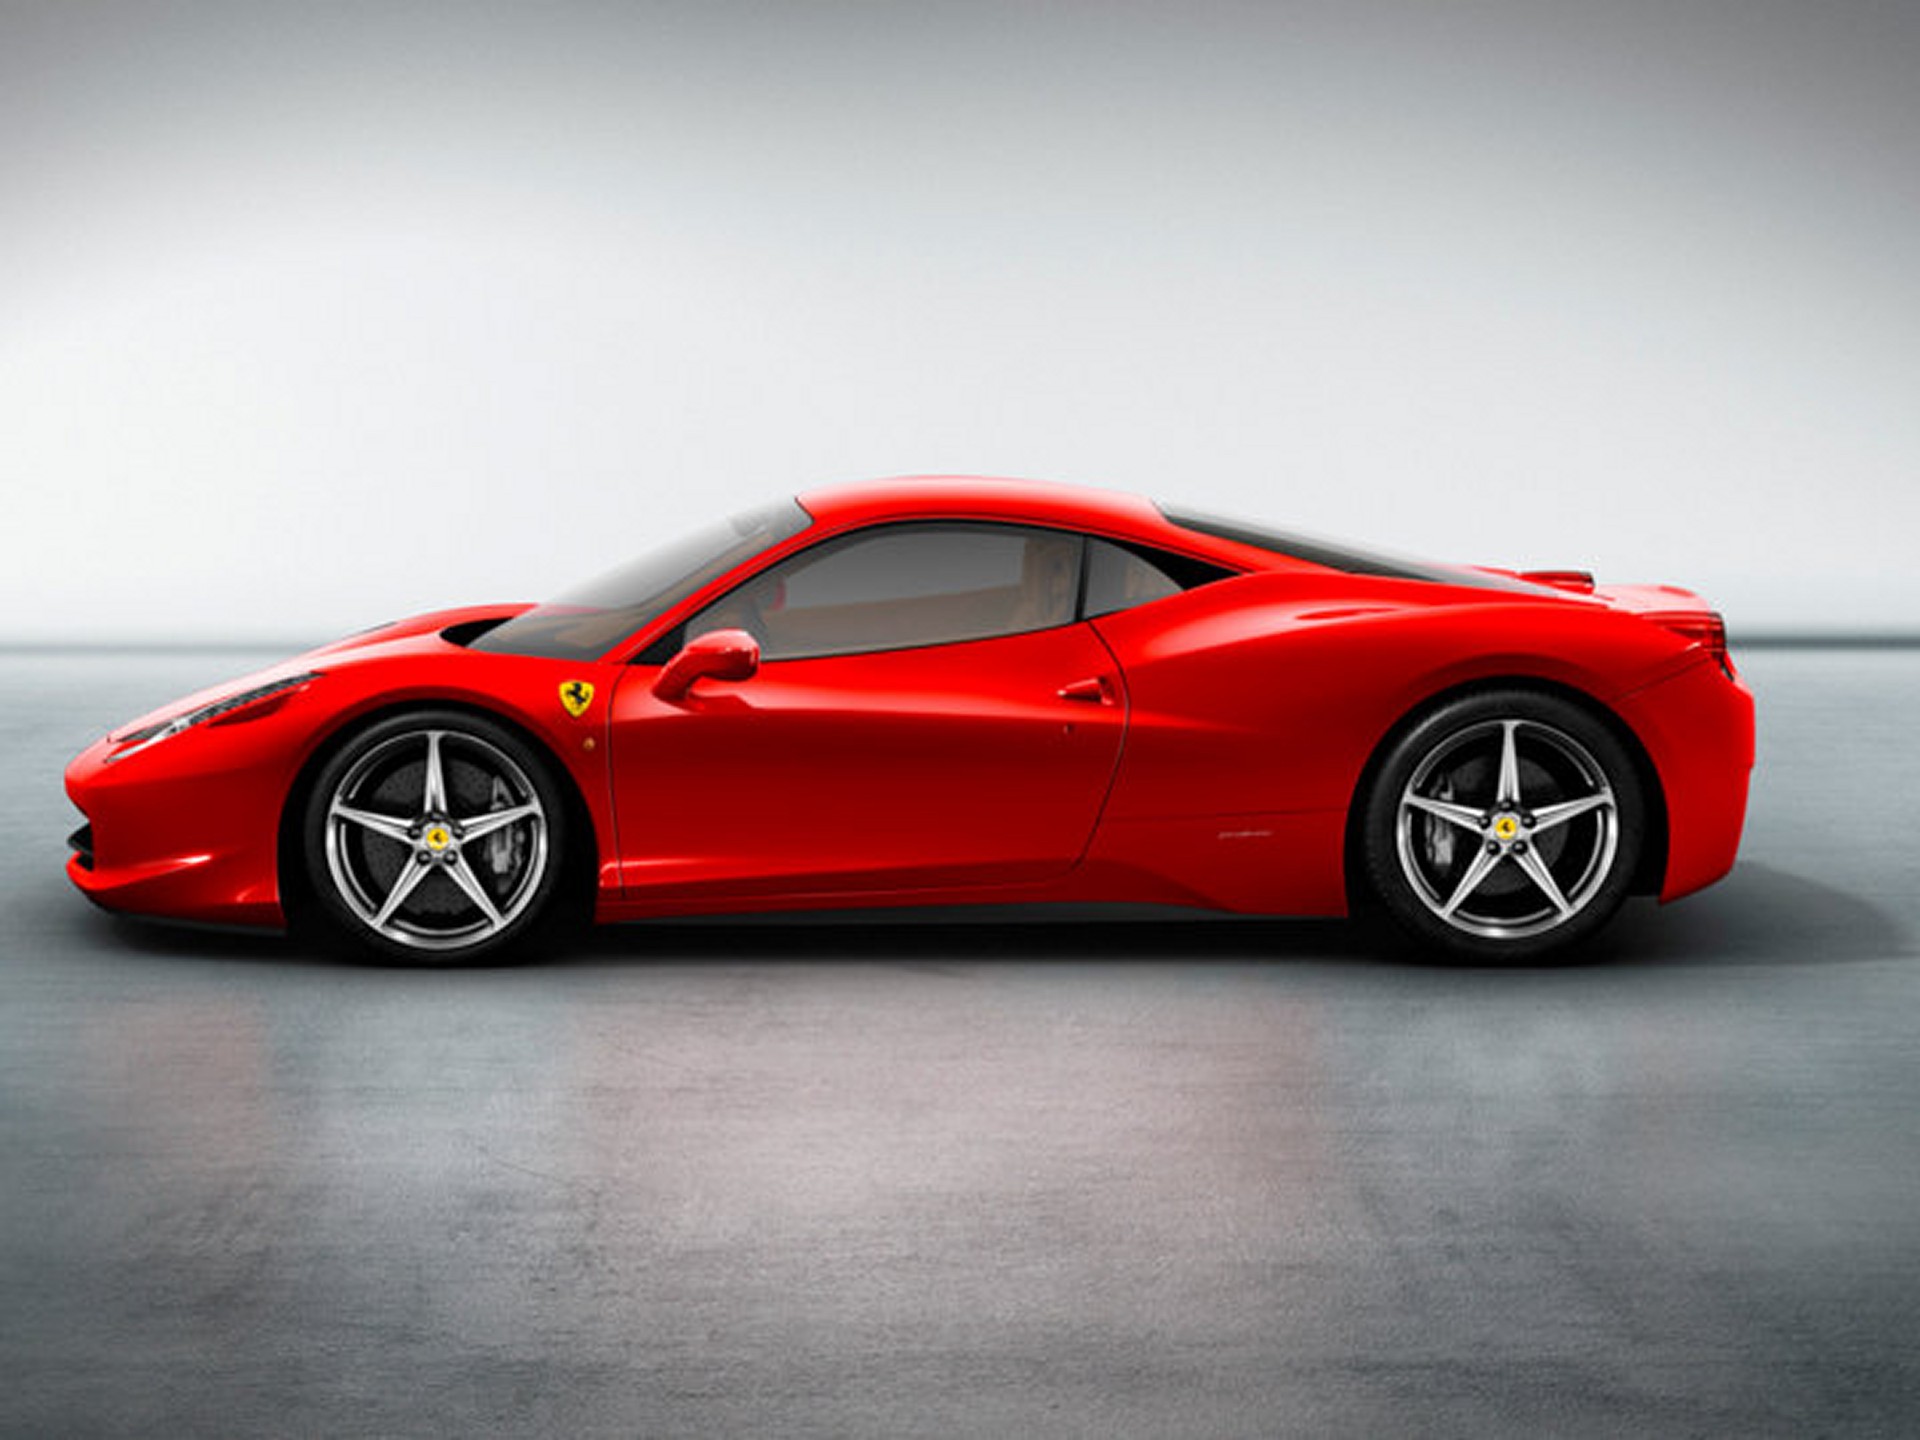 2015 Ferrari 458 Italia Summary Review - The Car Connection